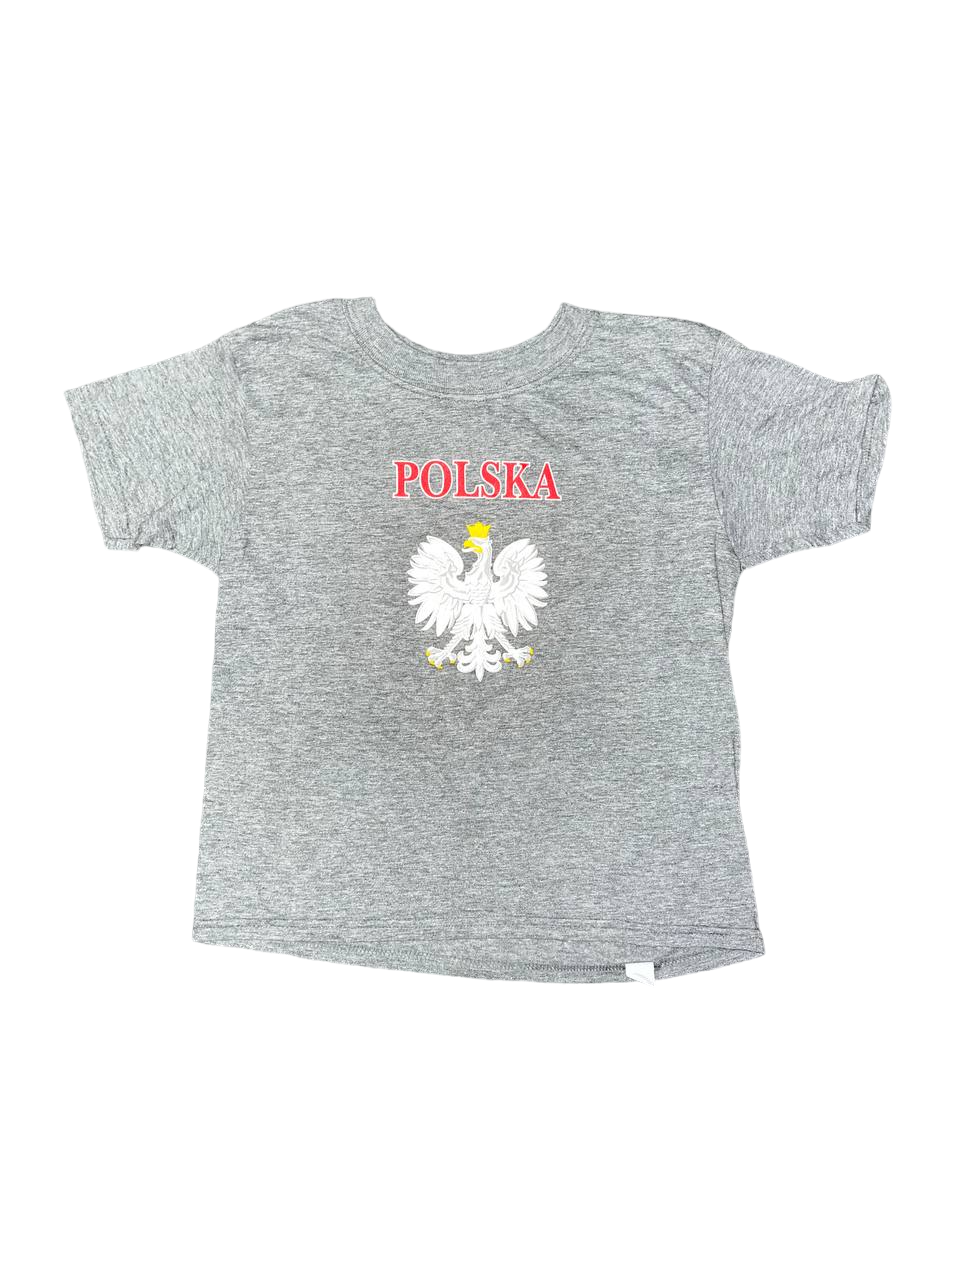 Todler Polish Eagle Print T-Shirt Polska Red/White